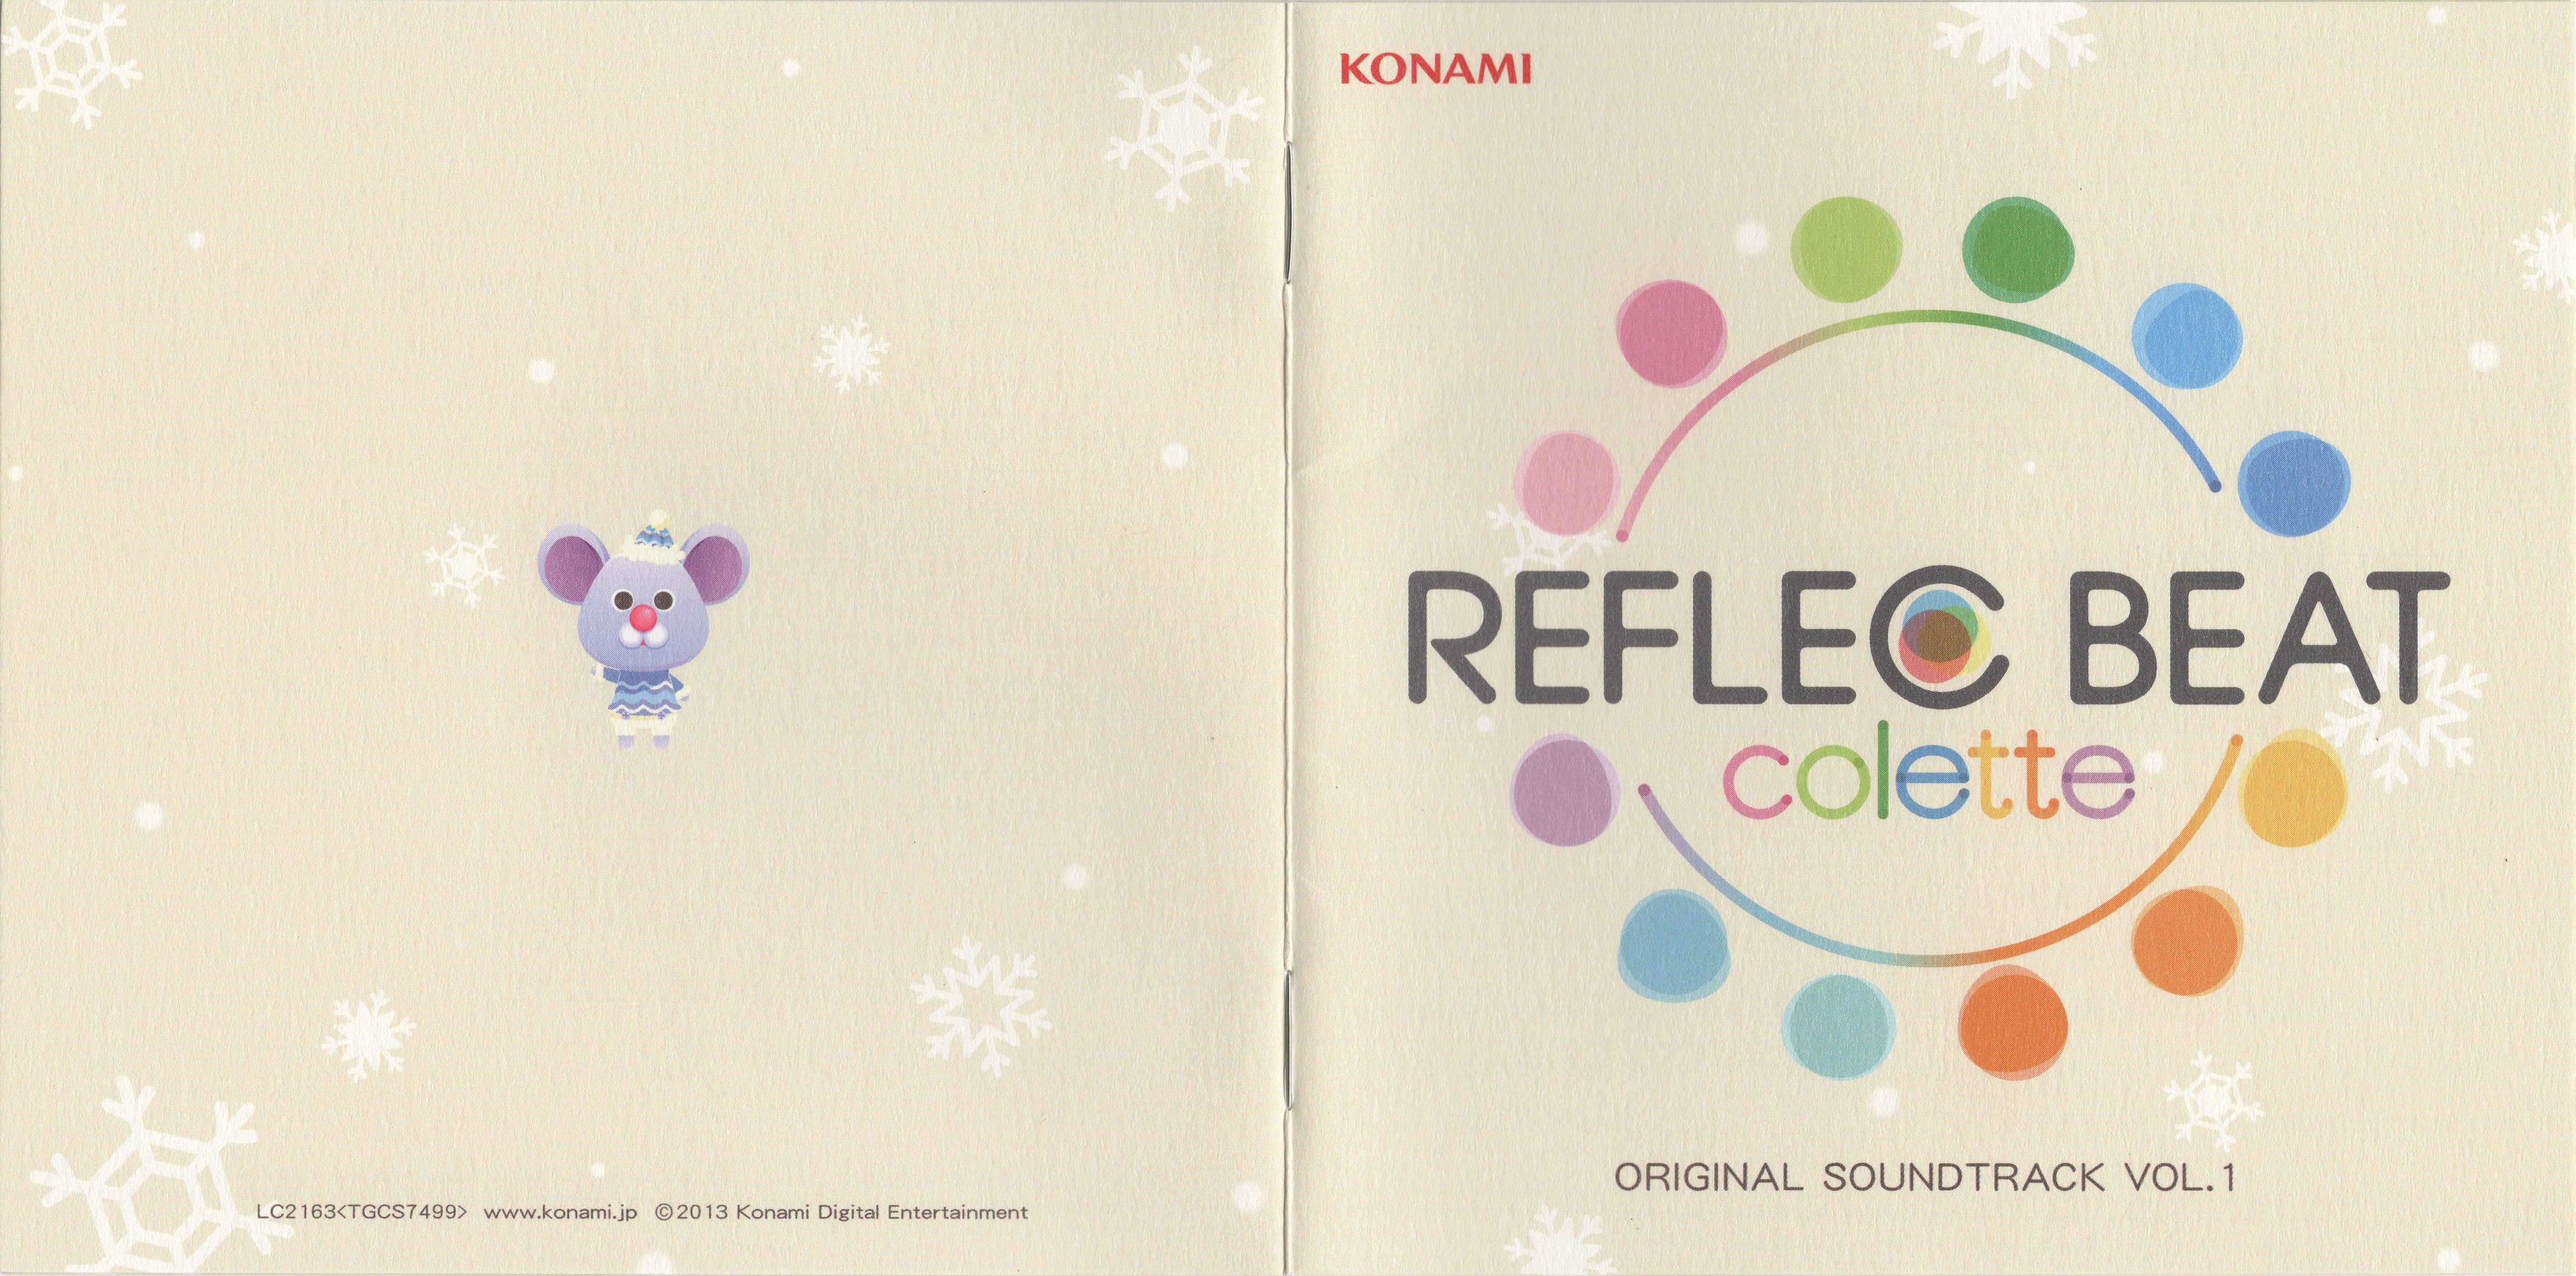 REFLEC BEAT colette ORIGINAL SOUNDTRACK VOL.1 (2013) MP3 - Download REFLEC  BEAT colette ORIGINAL SOUNDTRACK VOL.1 (2013) Soundtracks for FREE!